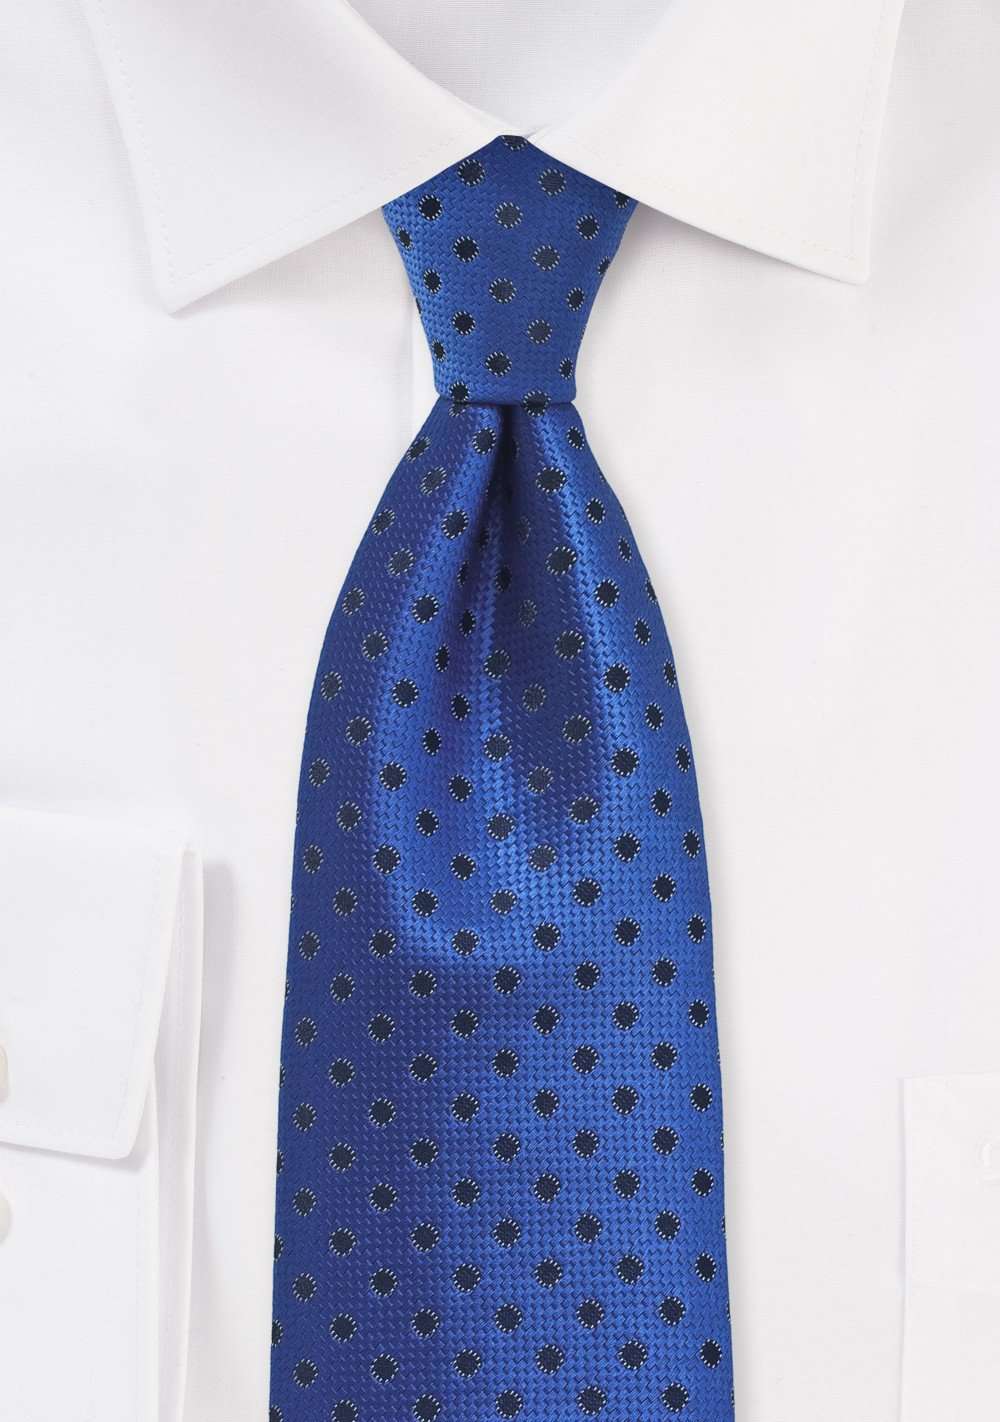 Ultra Marine Blue Polka Dot Necktie - Men Suits